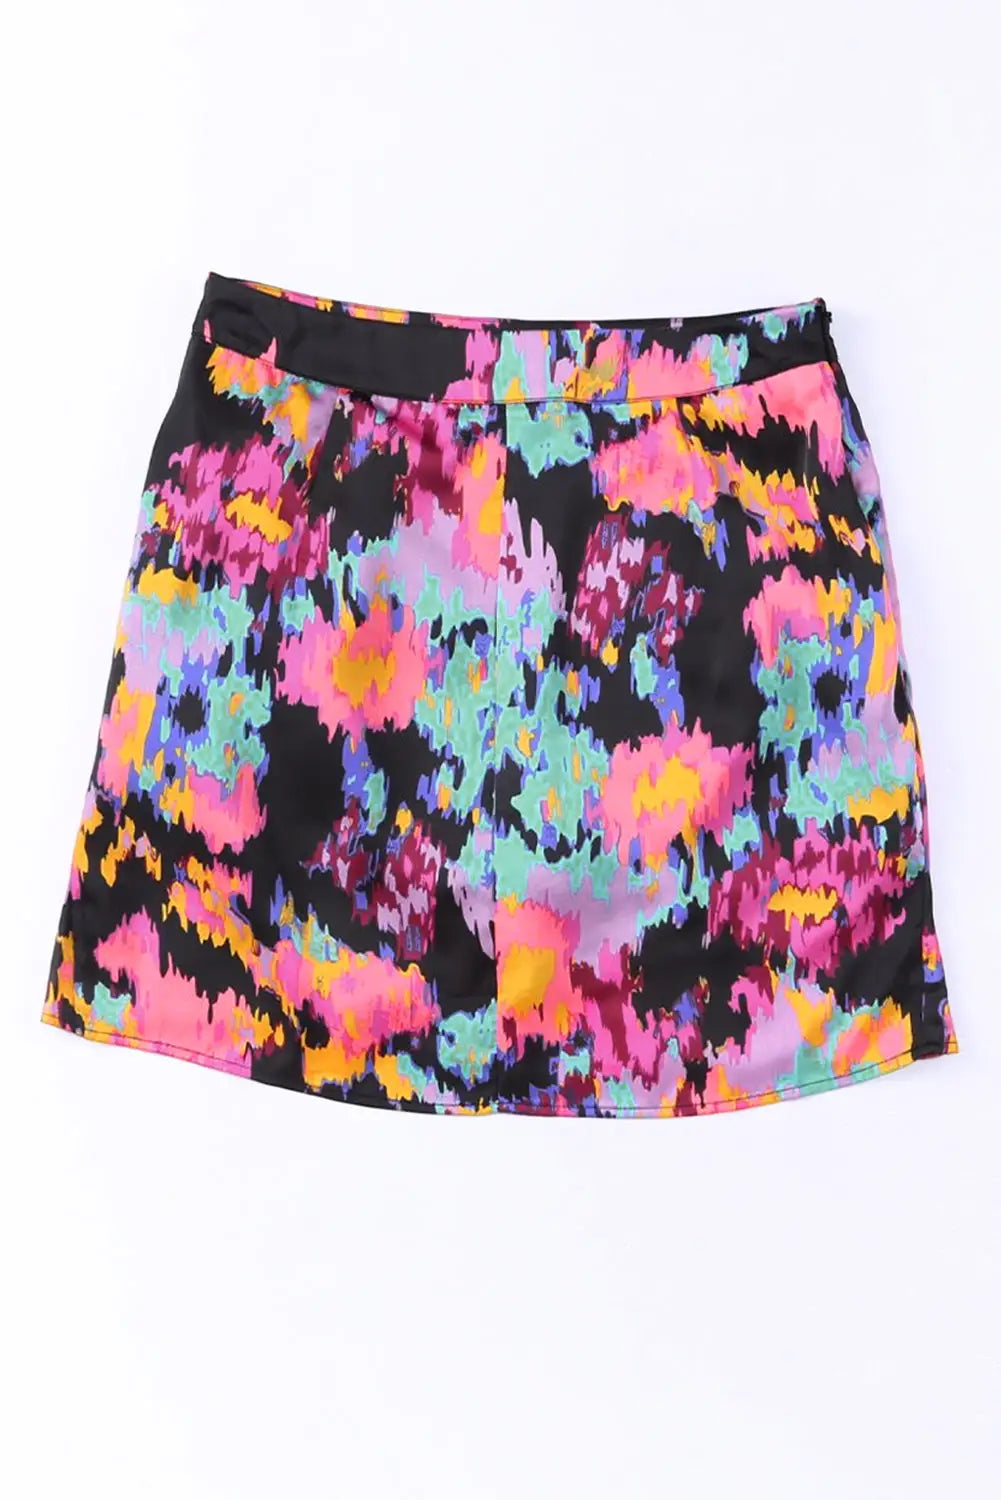 Black abstract/leopard print wrap hem mini skirt - skirts